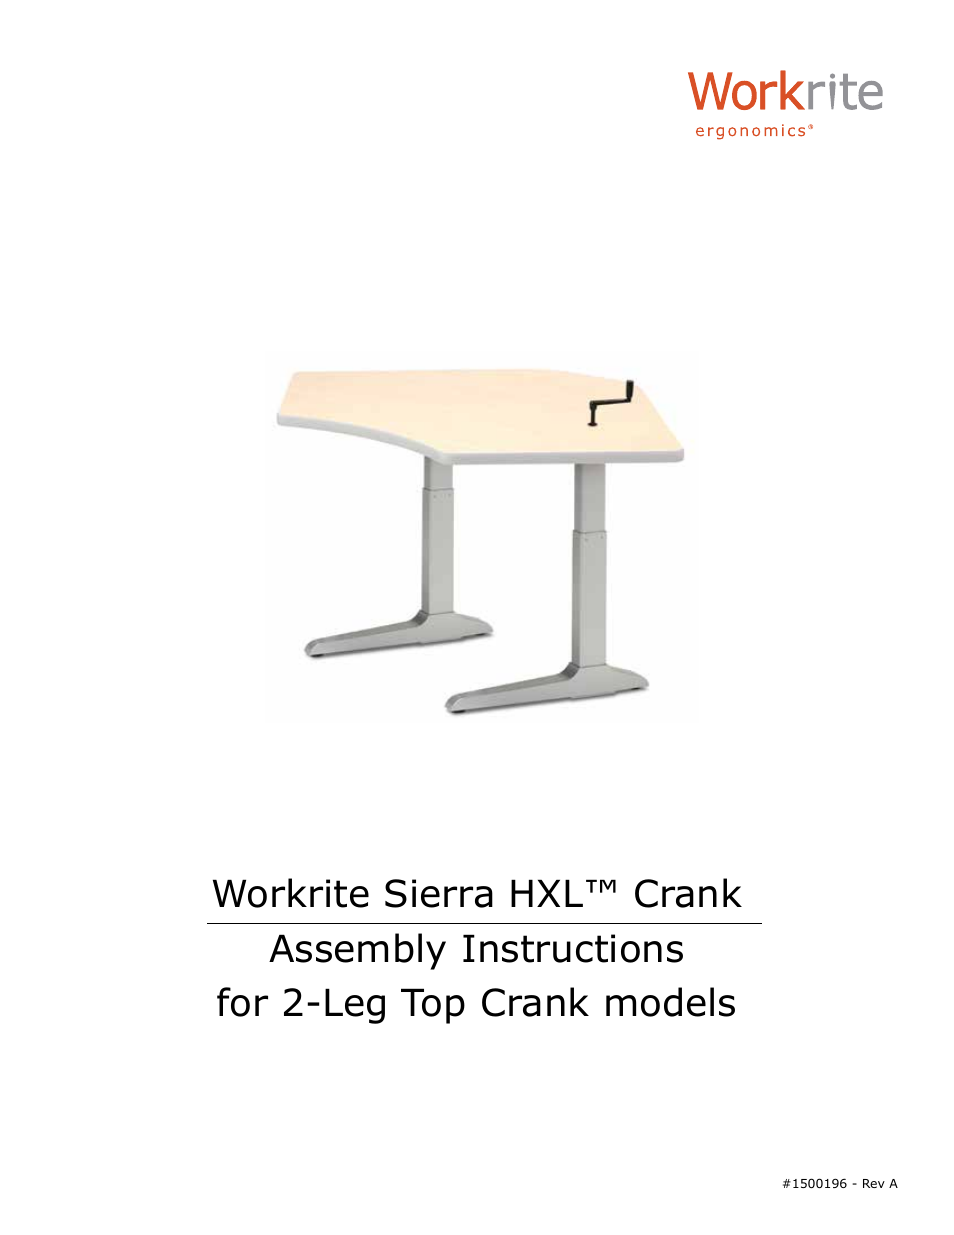 Sierra HXL Crank Assembly Instructions for 2-Leg Top Crank models